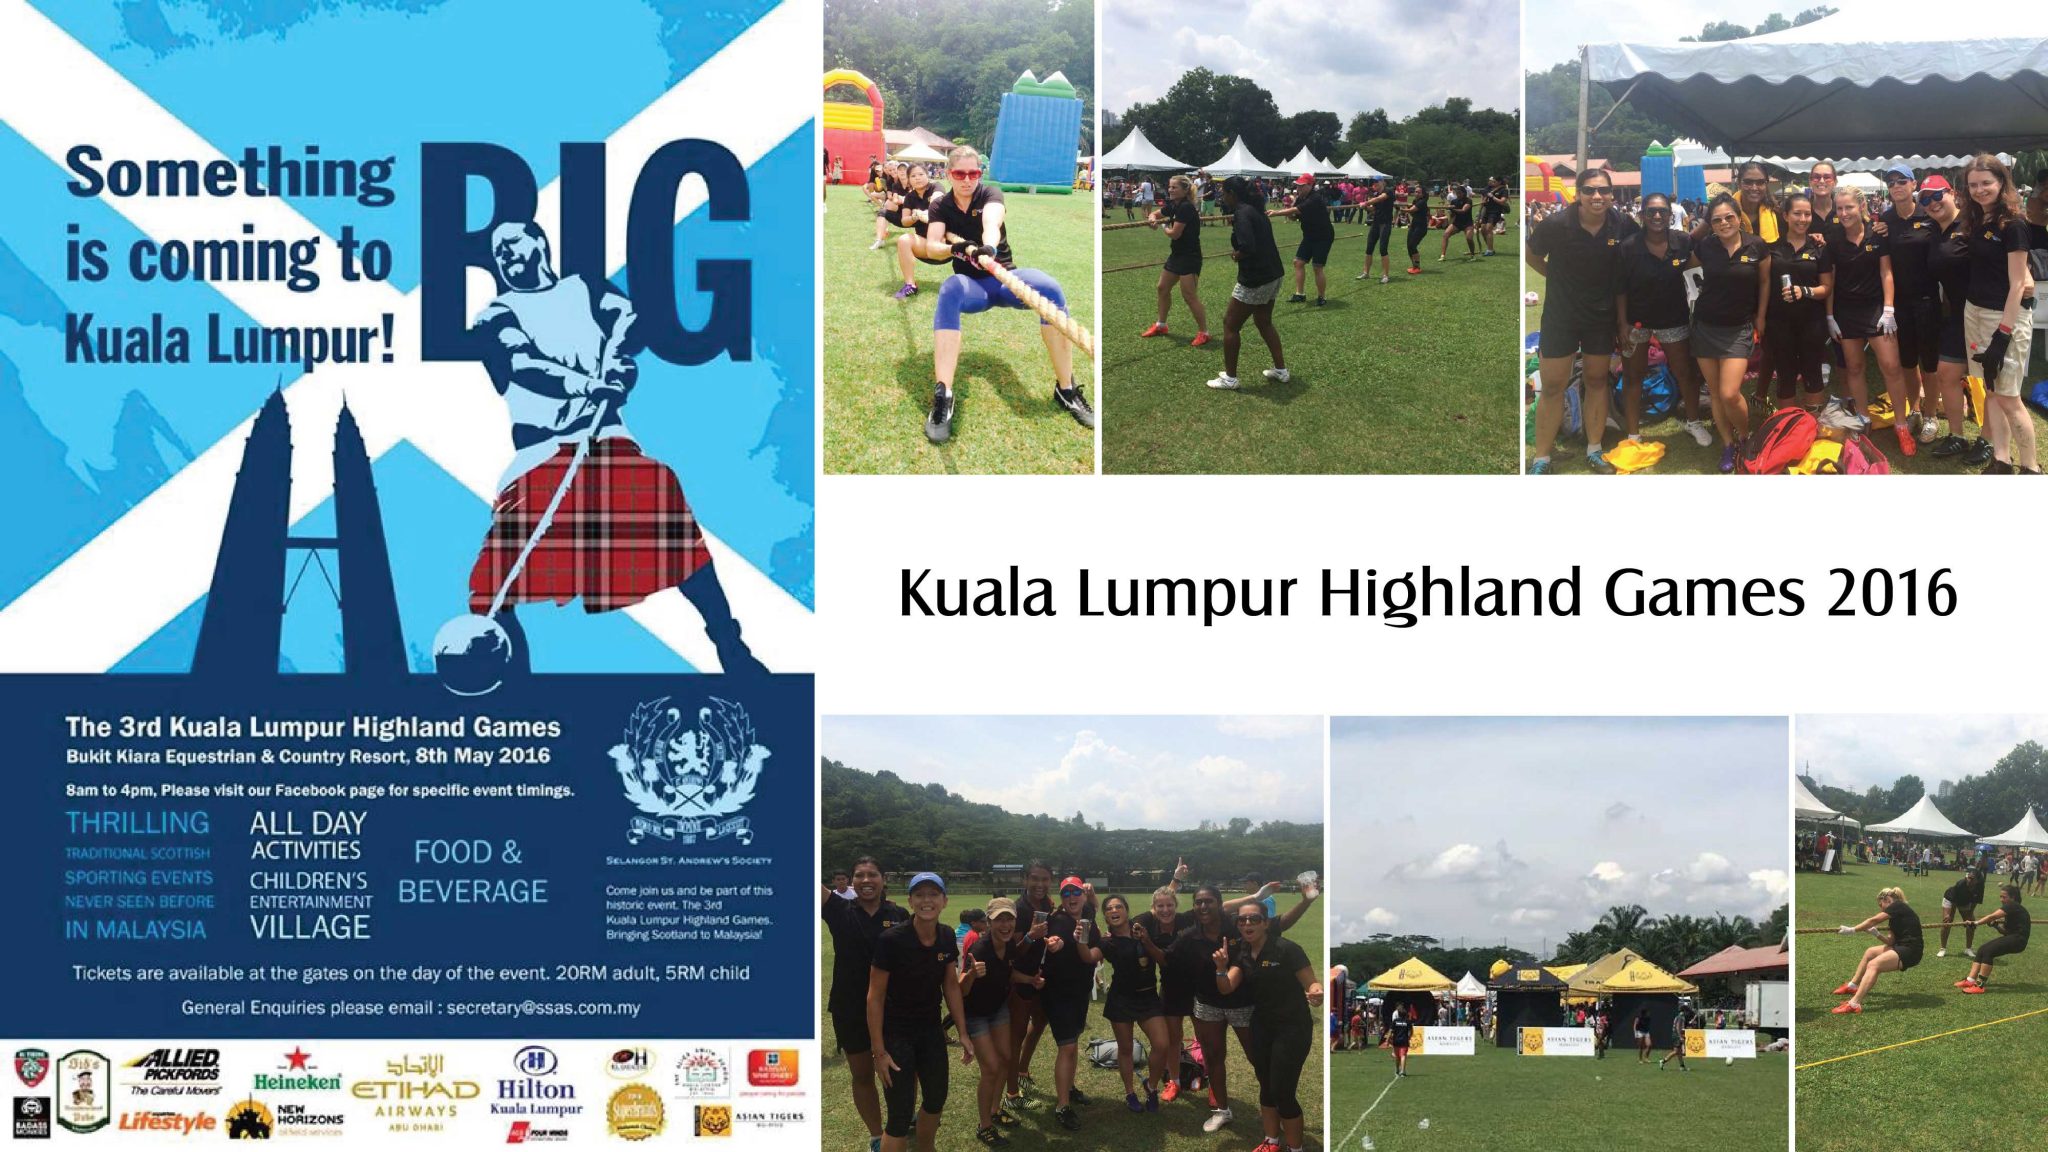 Asian Tigers Malaysia sponsors Kuala Lumpur Highland Games 2016